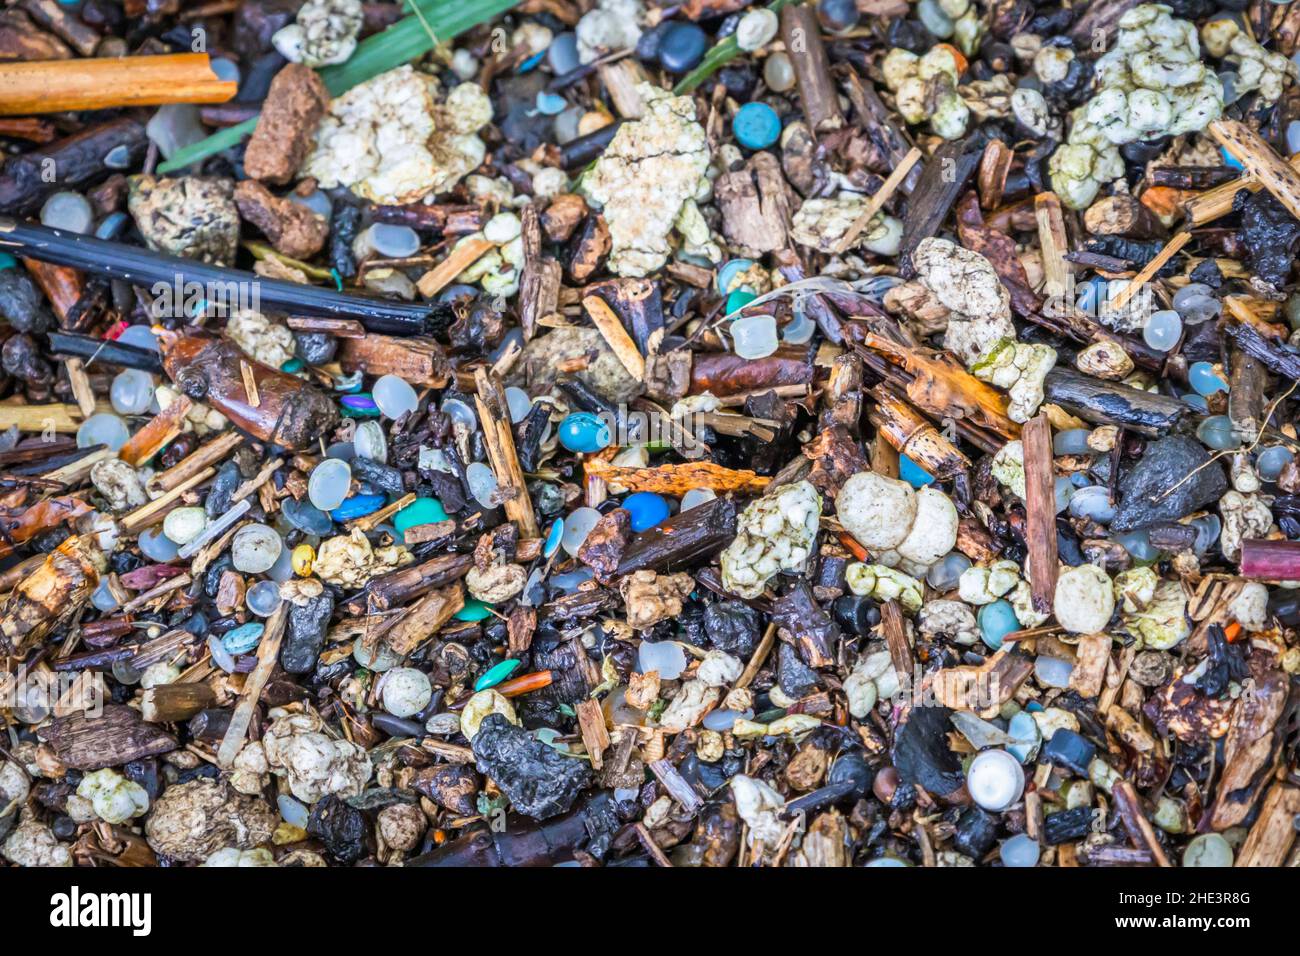 Plastic pollution crisis, environmental damage at UK nature reserve Stock Photo